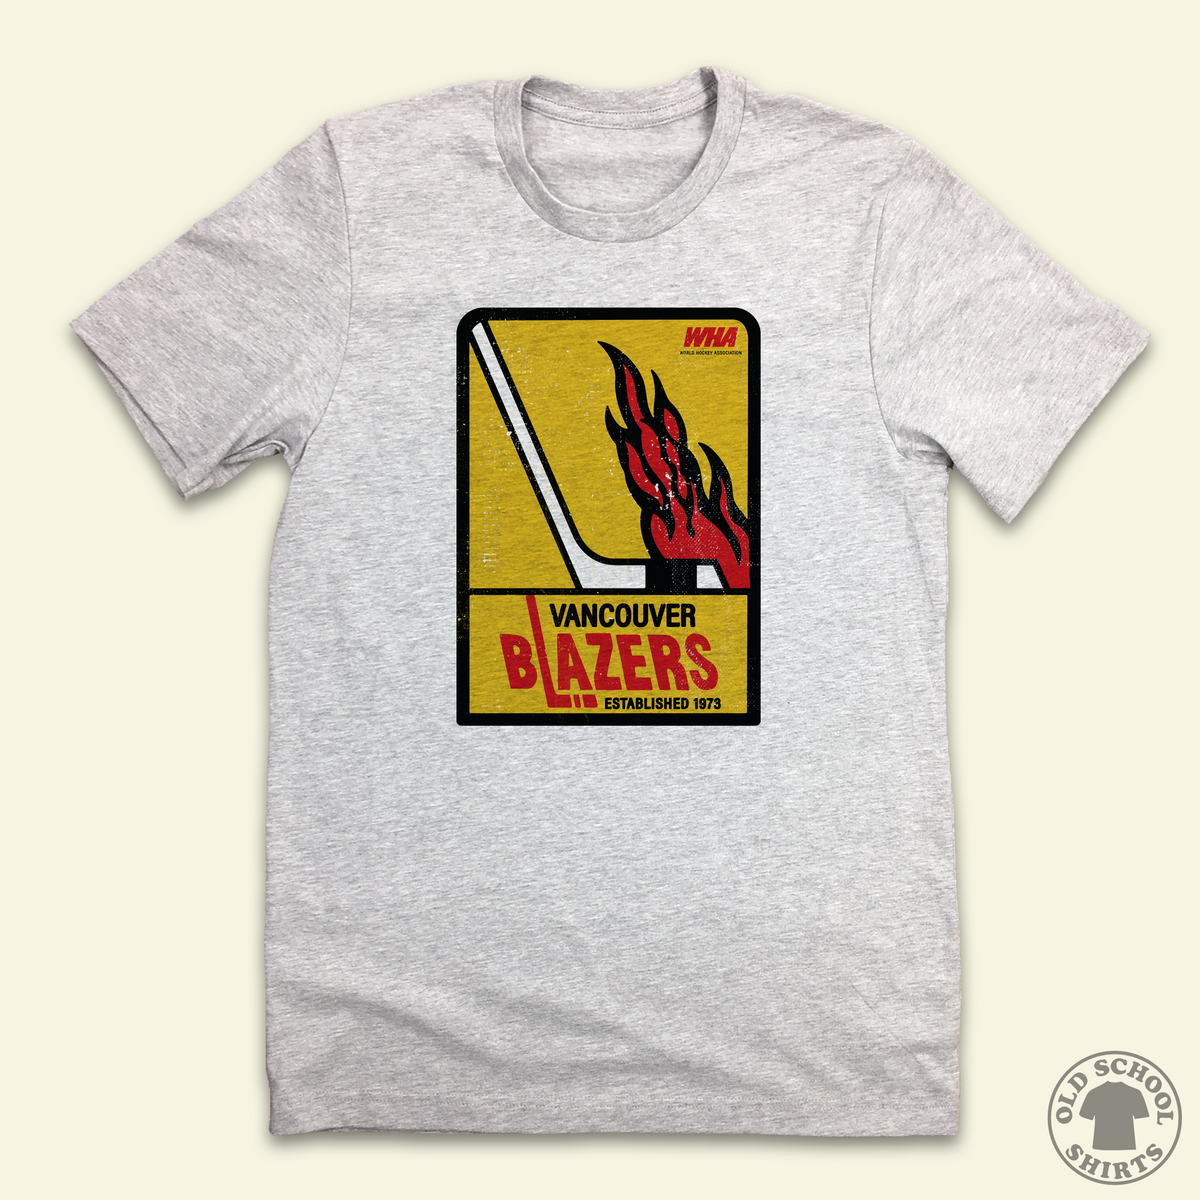 Vancouver Blazers T-shirt